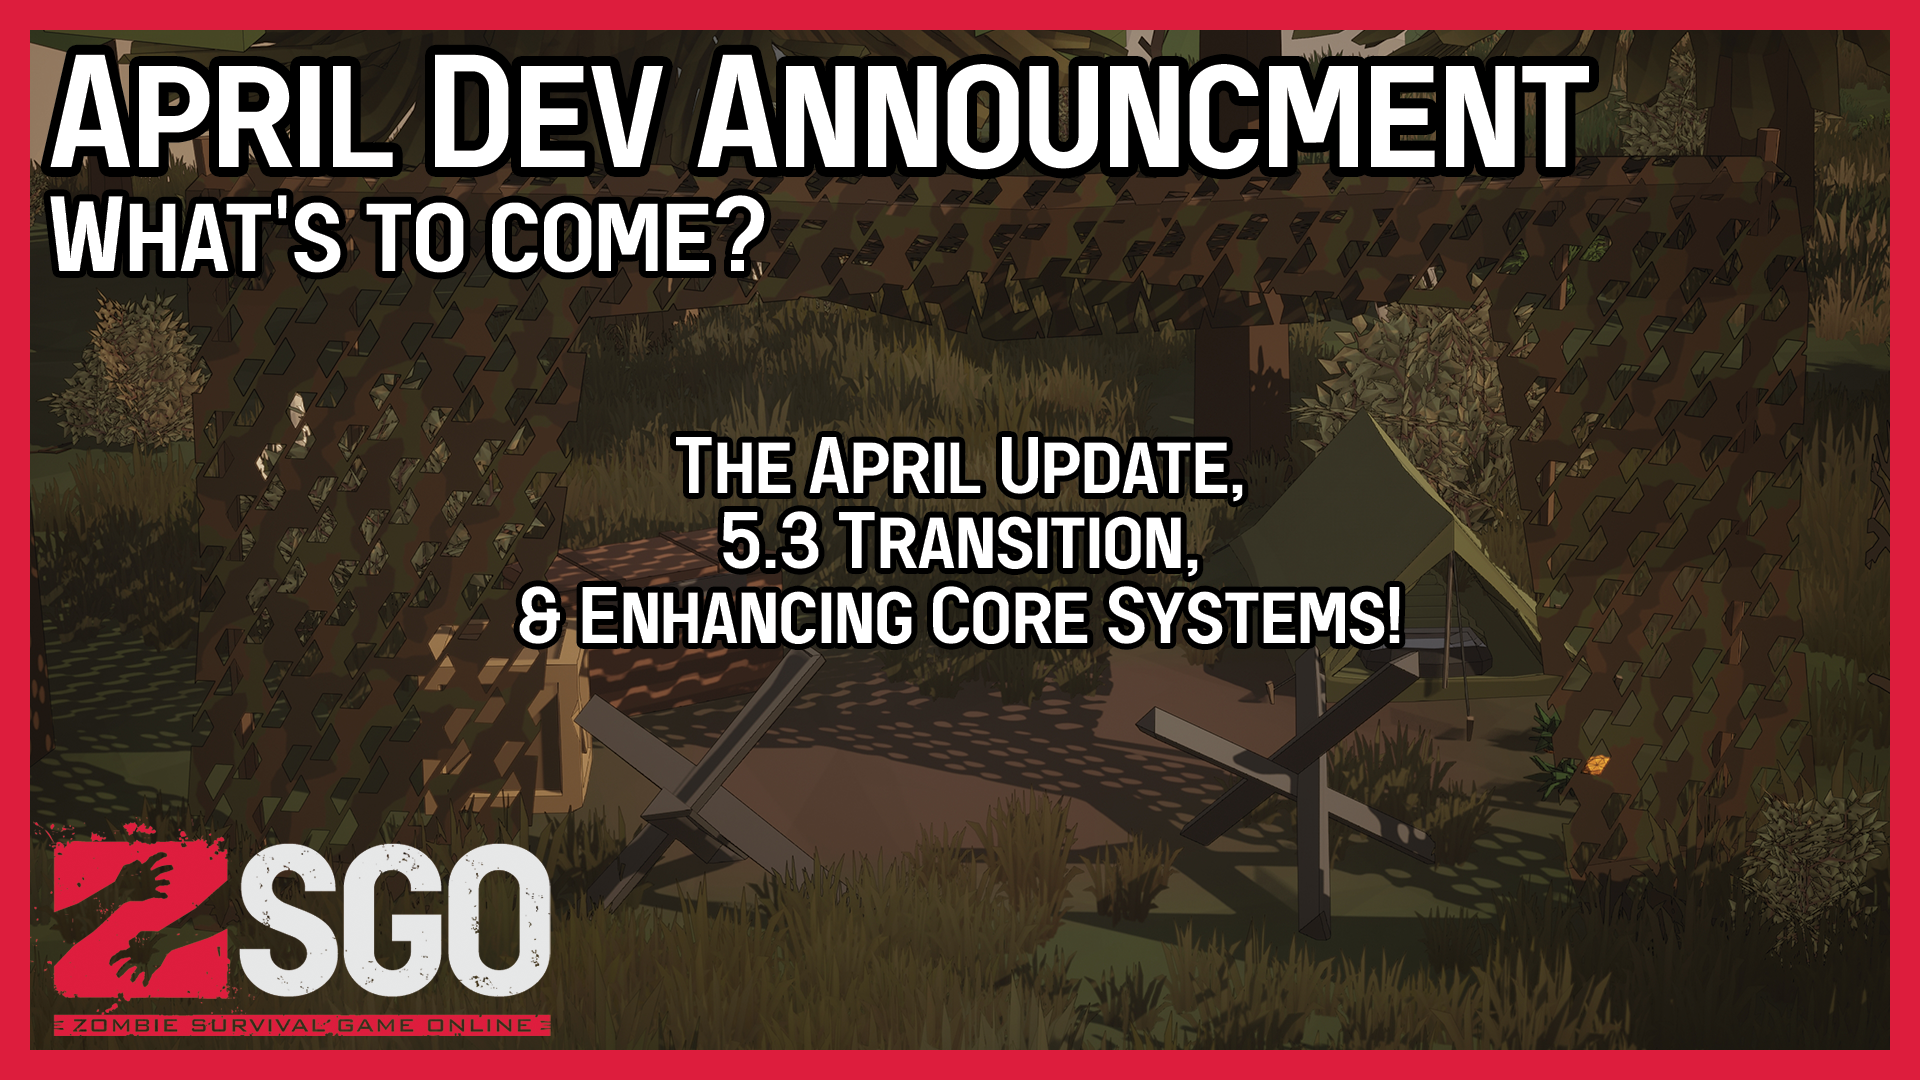 The April Dev Announcement featuring some Nomad Build Parts.